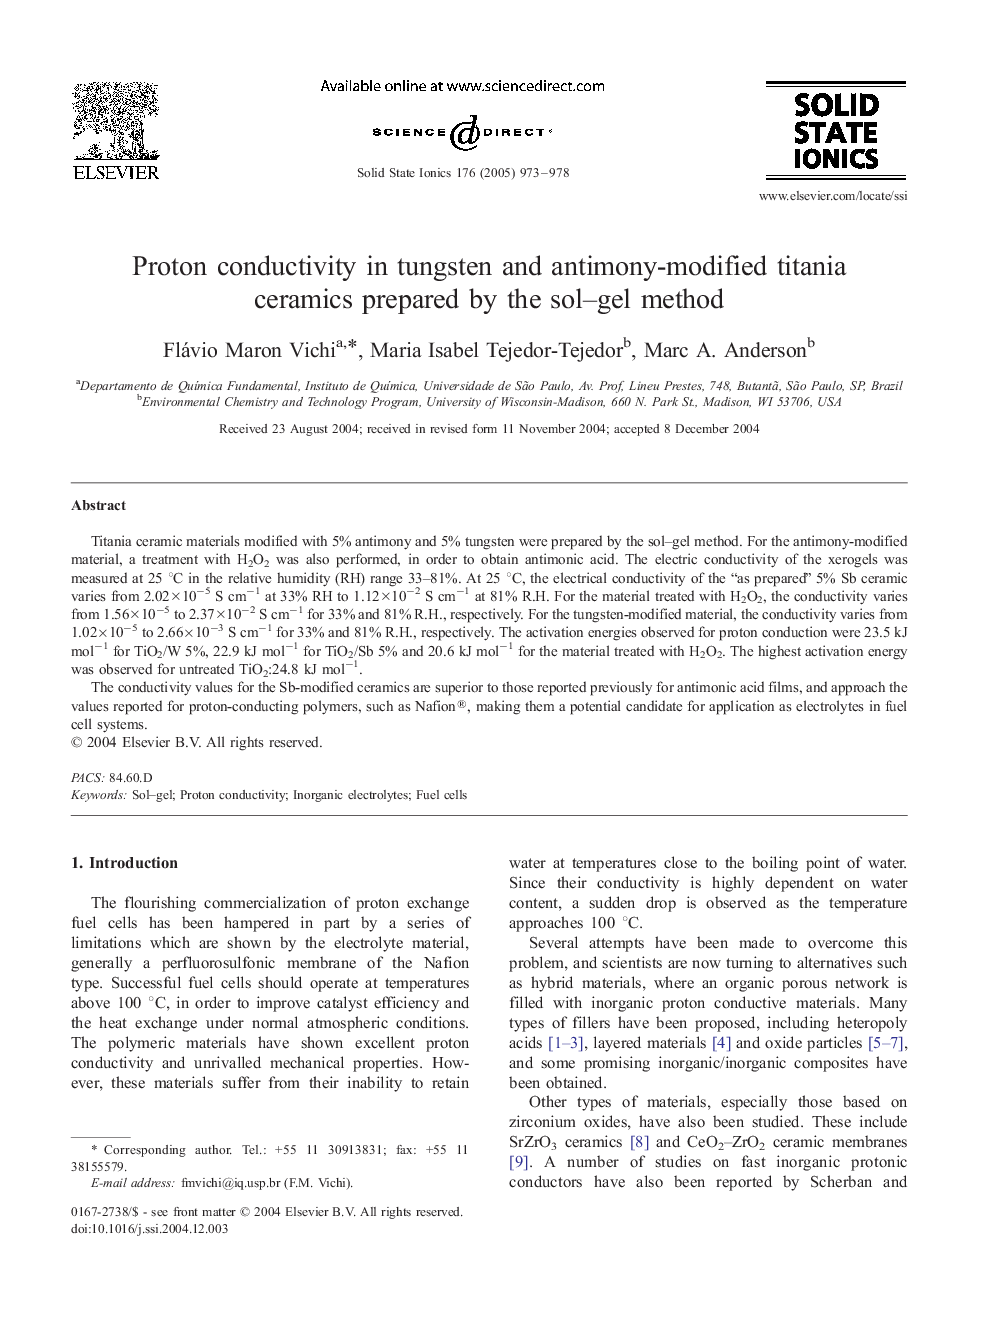 Proton conductivity in tungsten and antimony-modified titania ceramics prepared by the sol-gel method